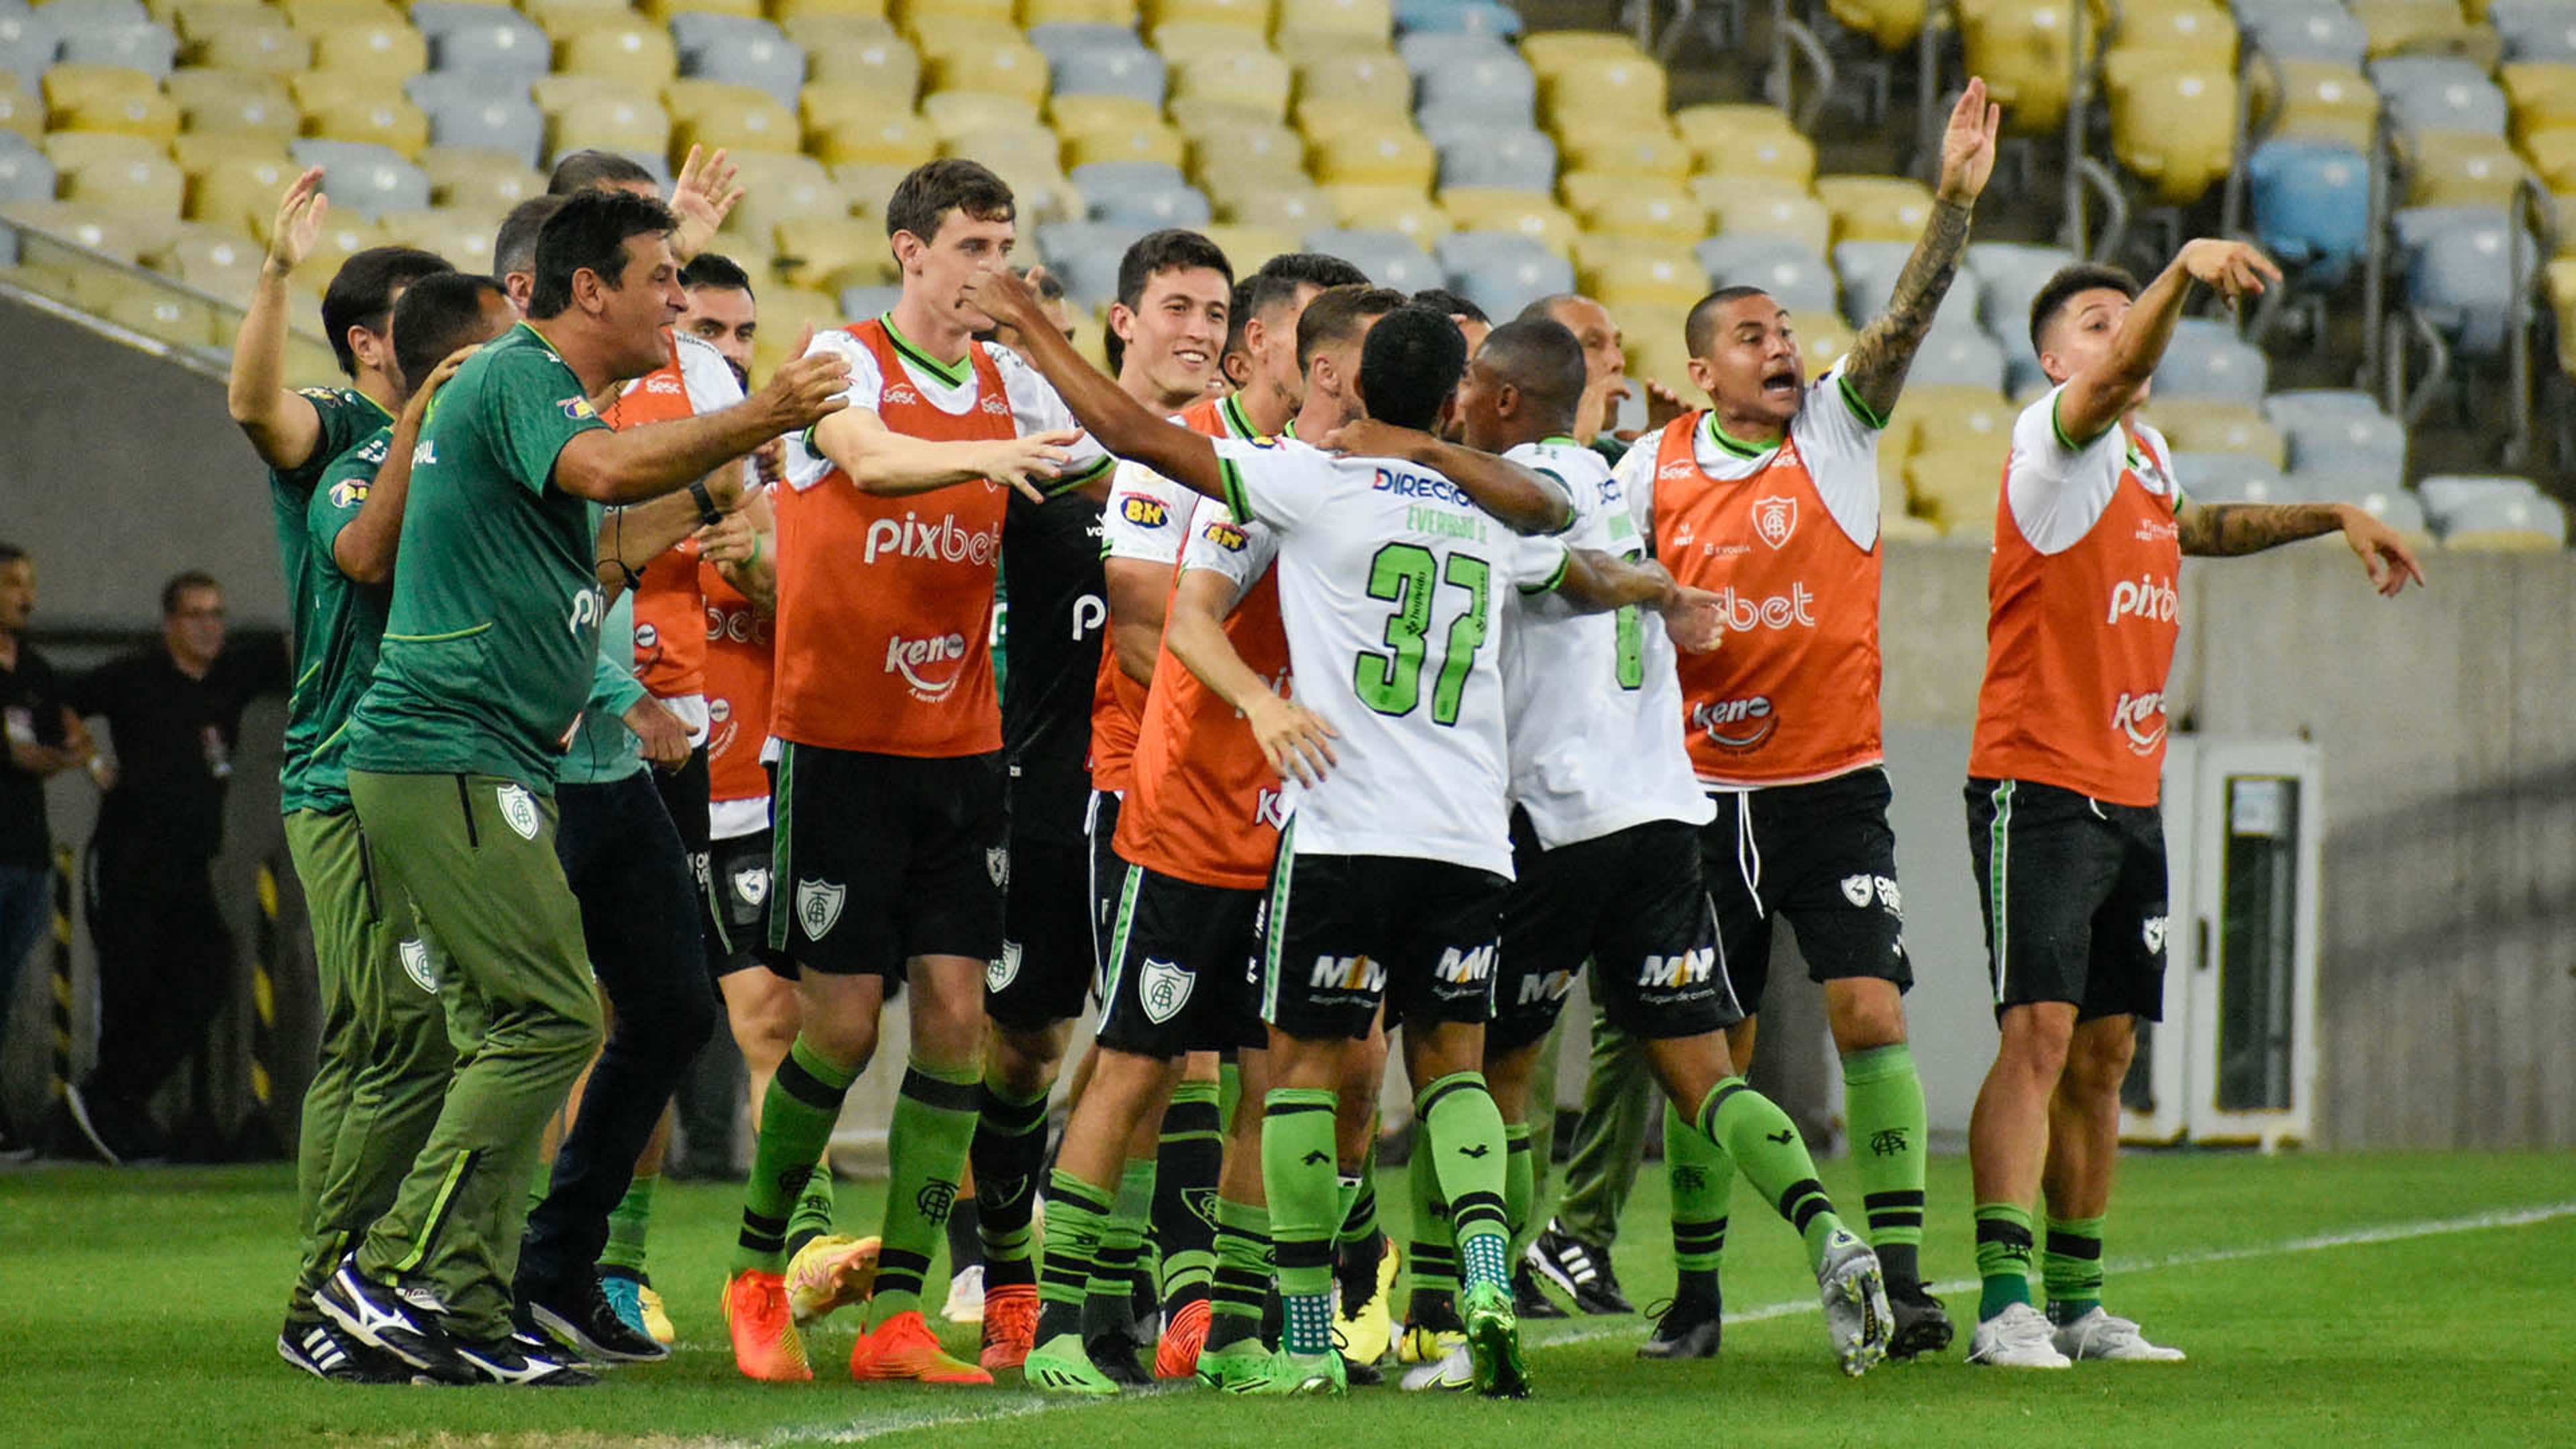 Tombense vs Vila Nova: A Clash of Football Titans